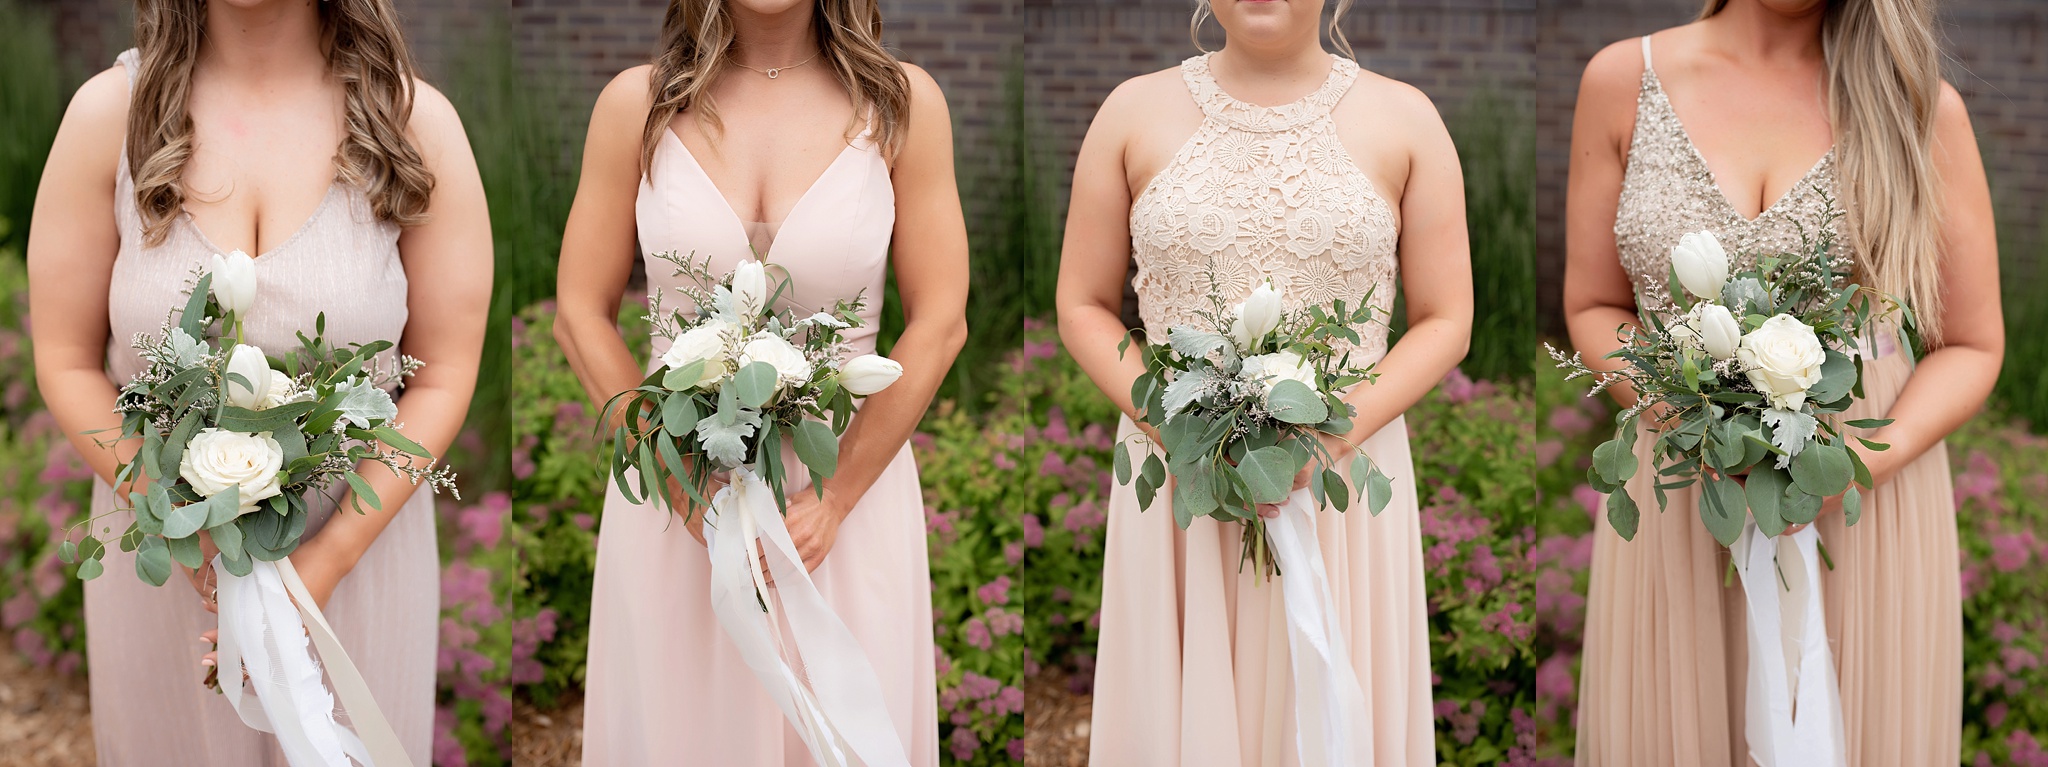 coordinating bridesmaids dresses